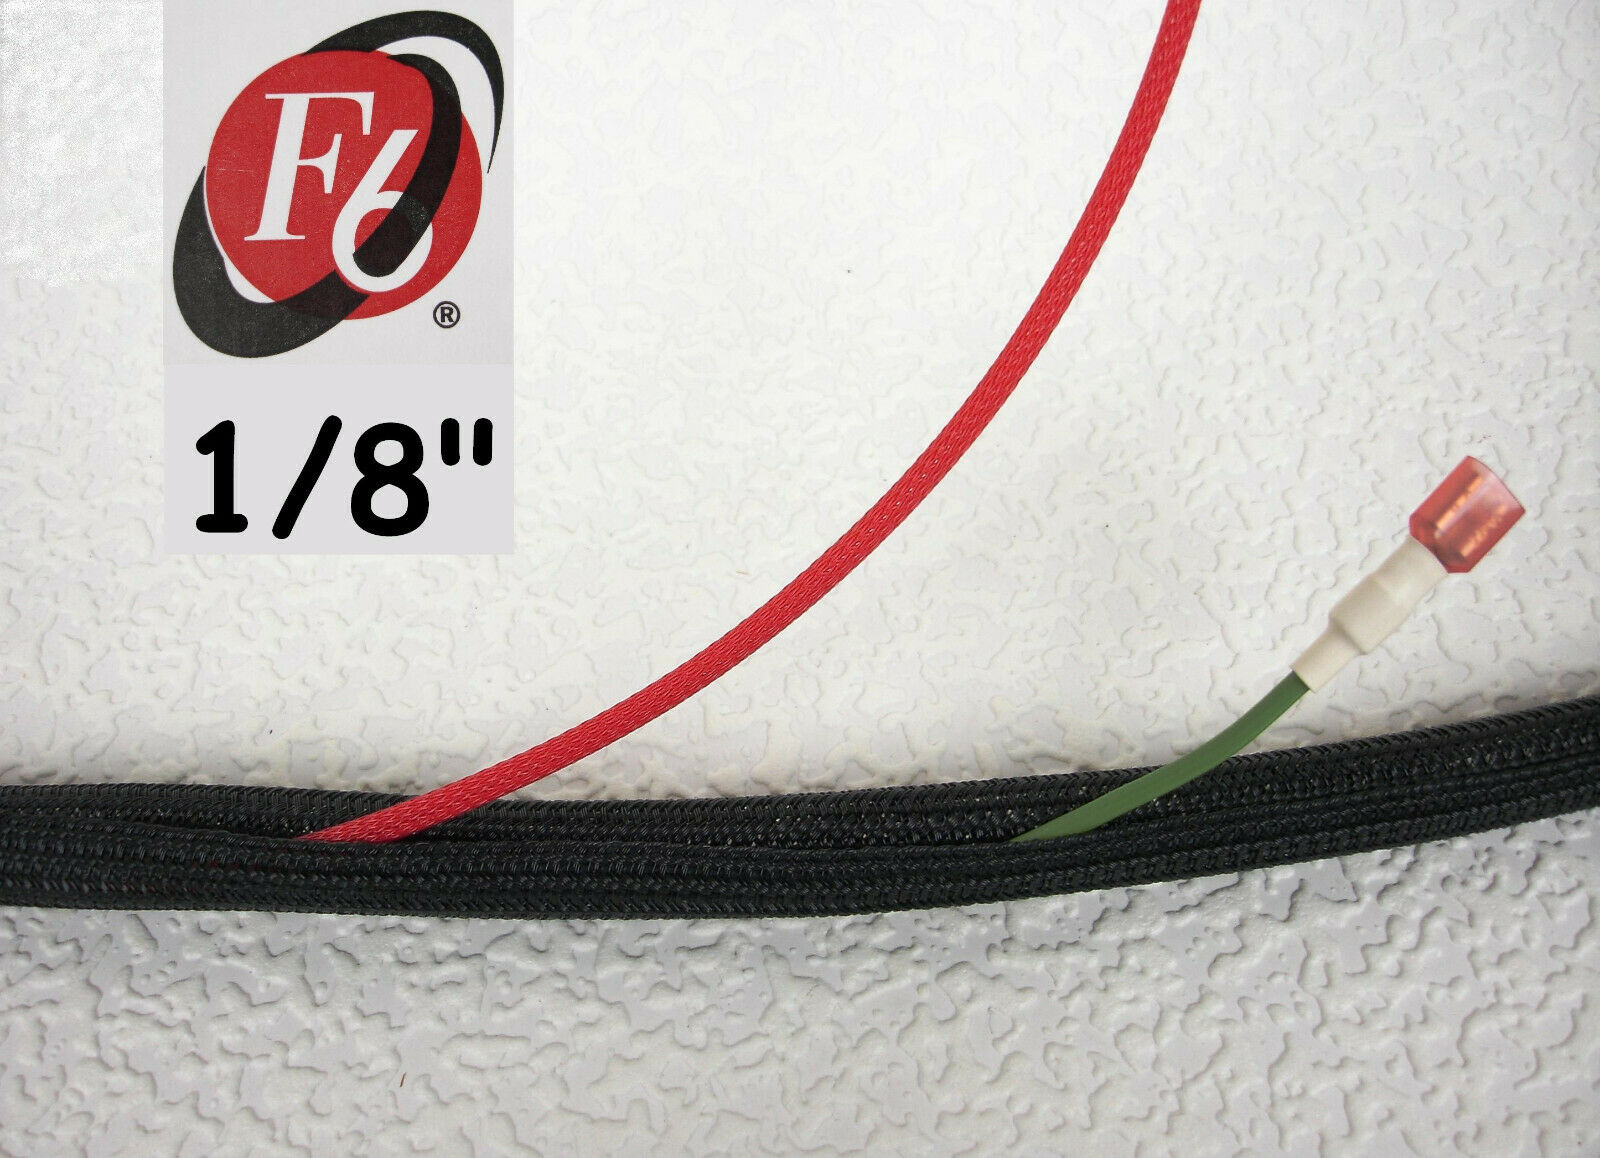 1/8" Flexo F6 Braided Cable Sleeving Wrap, Split Loom, Techflex F6n0.13bk